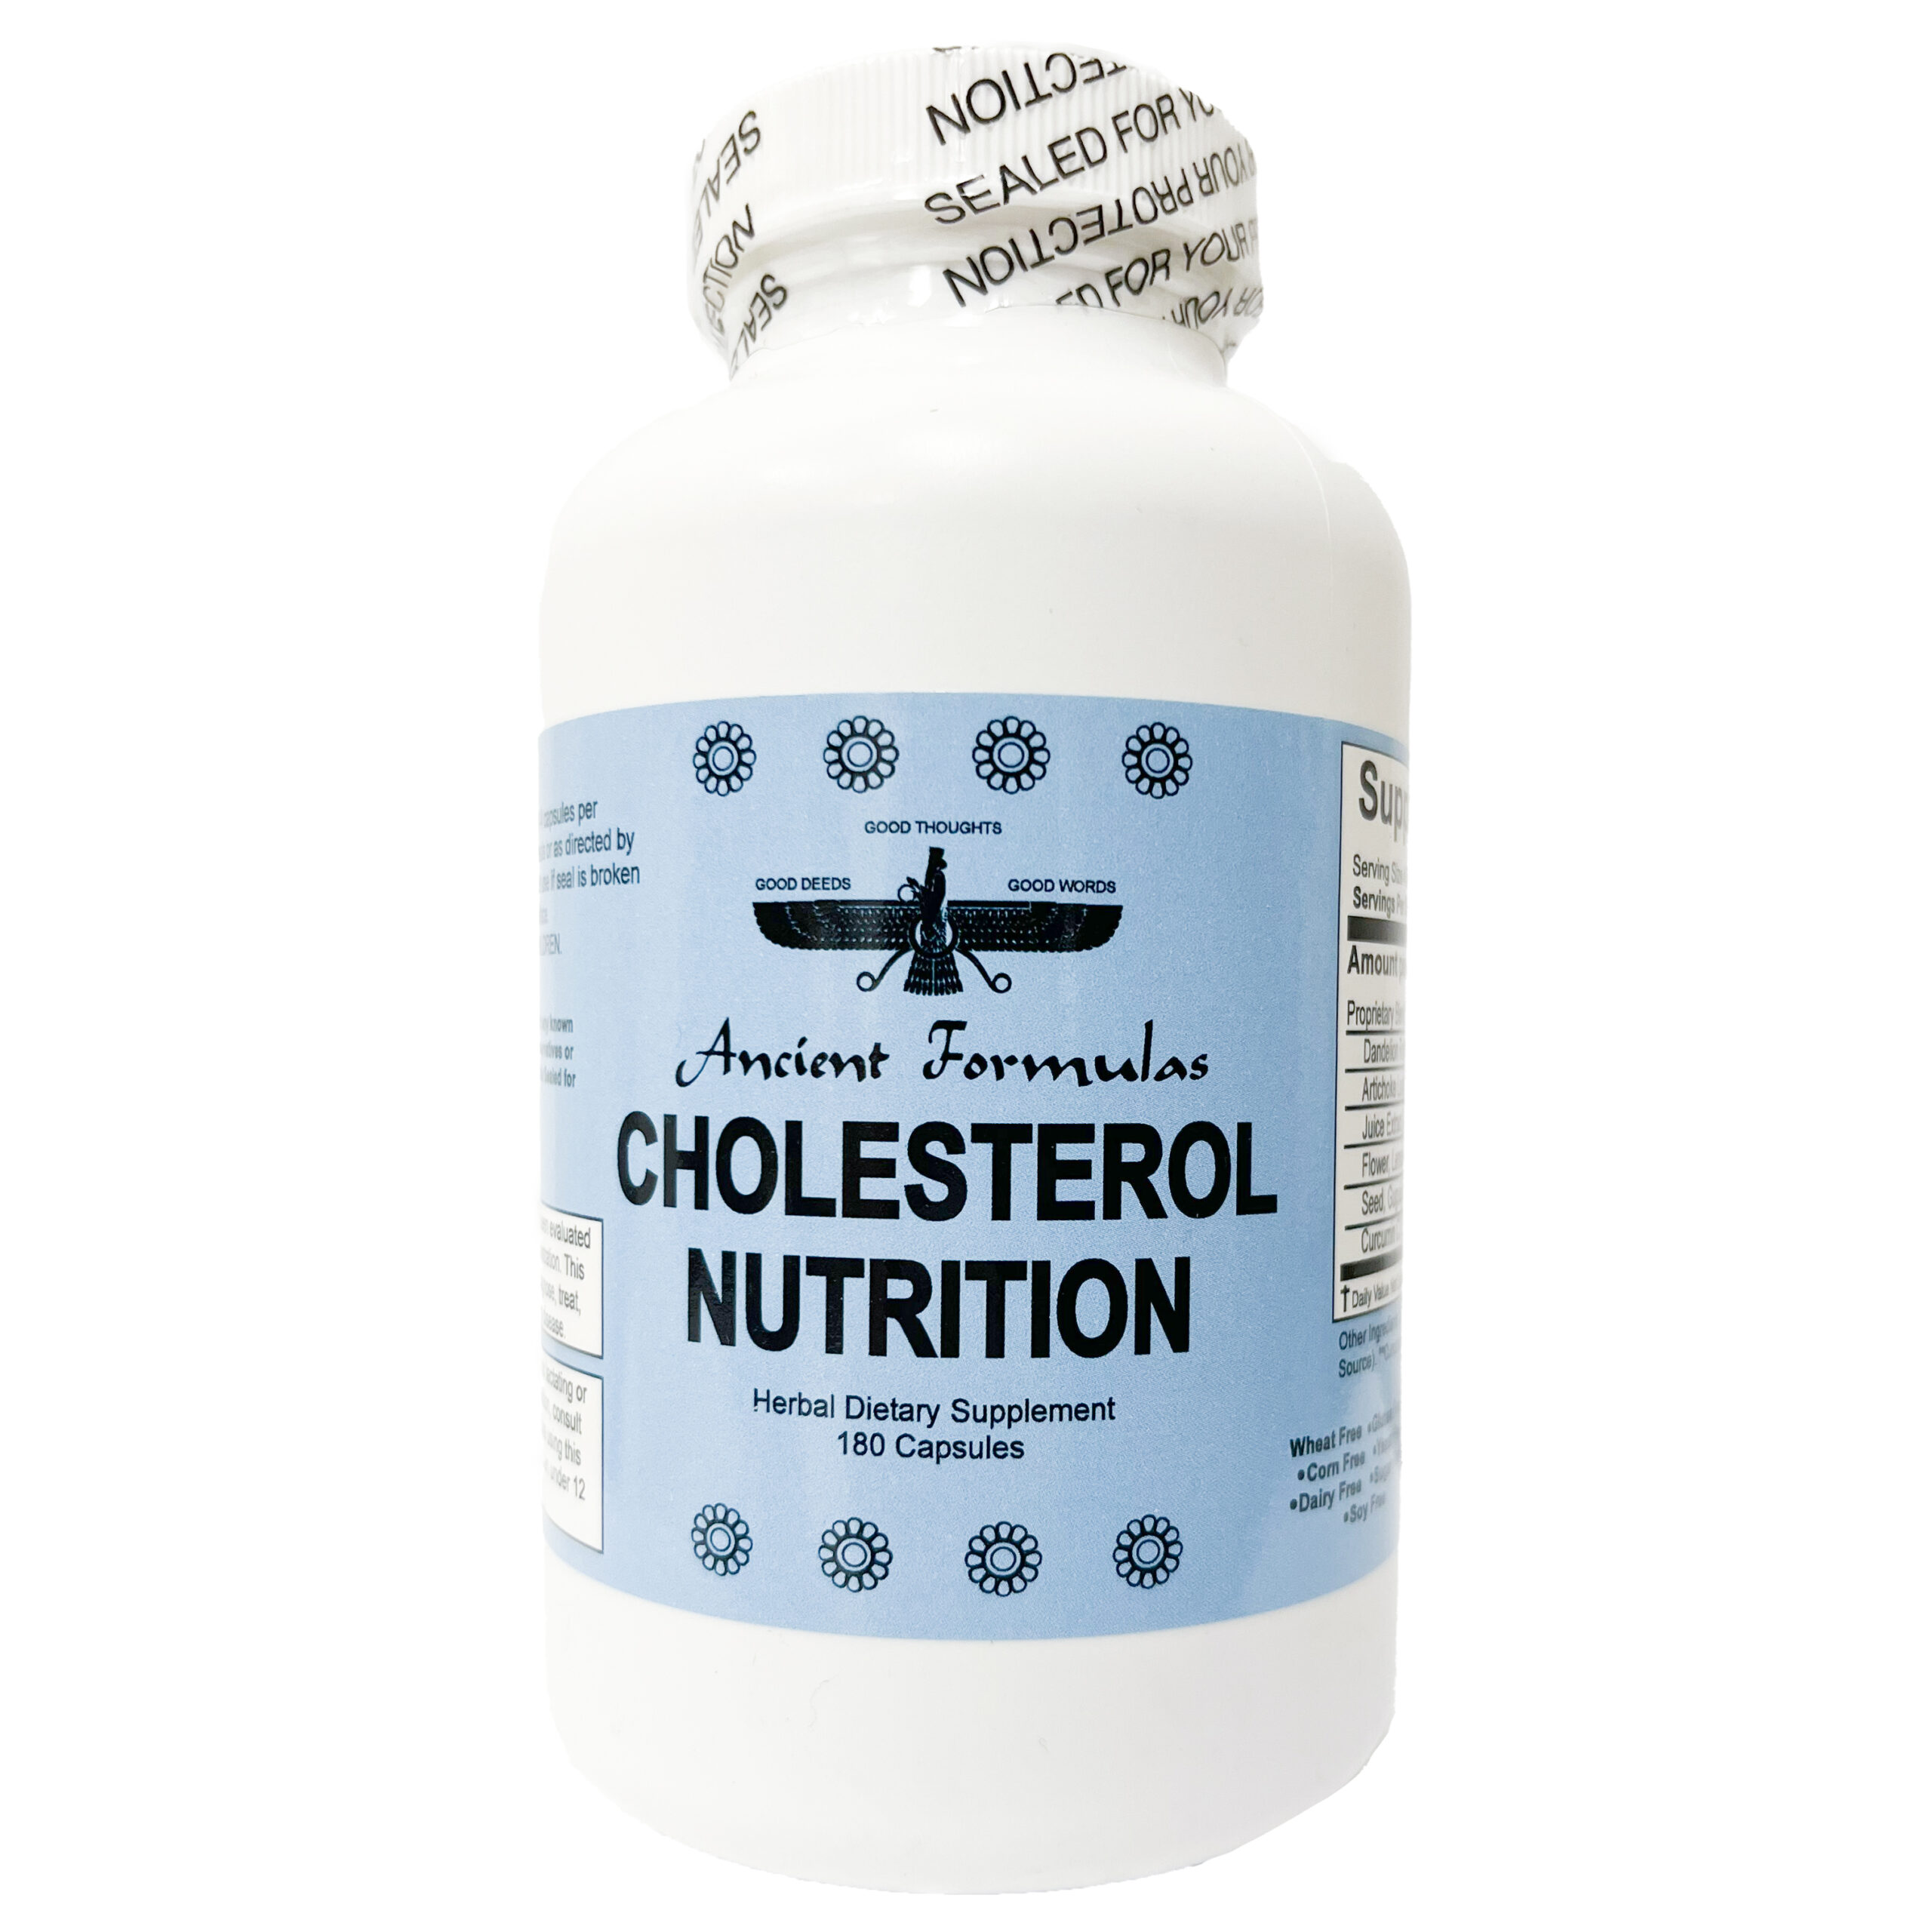 Cholesterol Nutrition